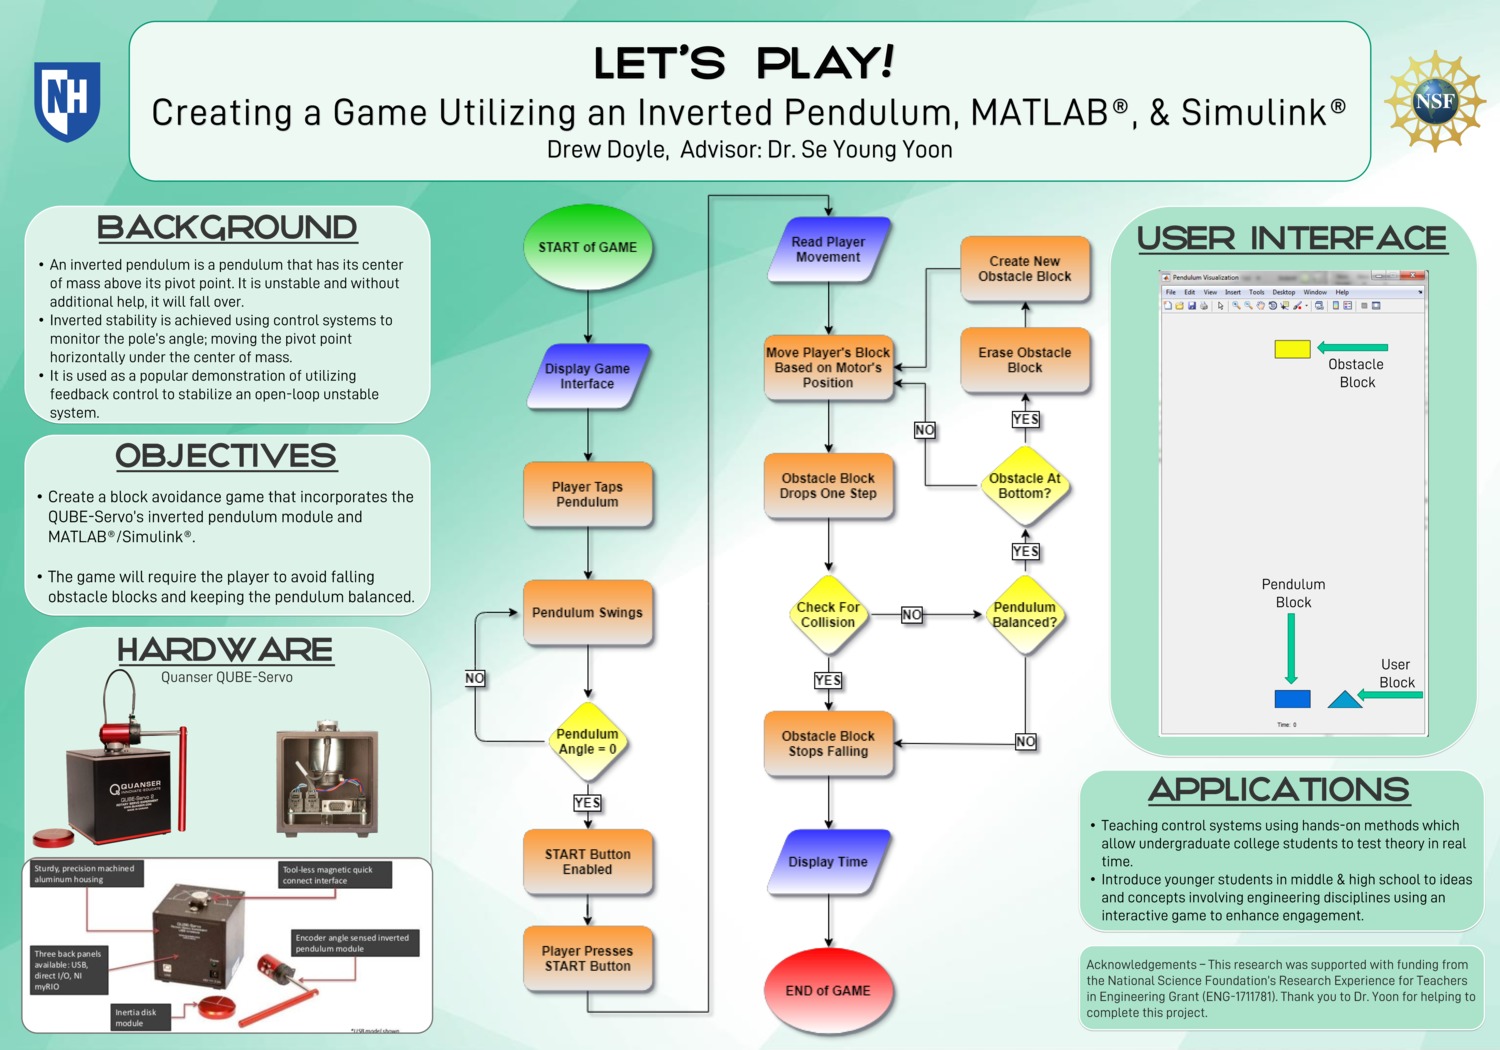 Creating A Game Utilizing An Inverted Pendulum, Matlab, & Simulink by drewdoyle3